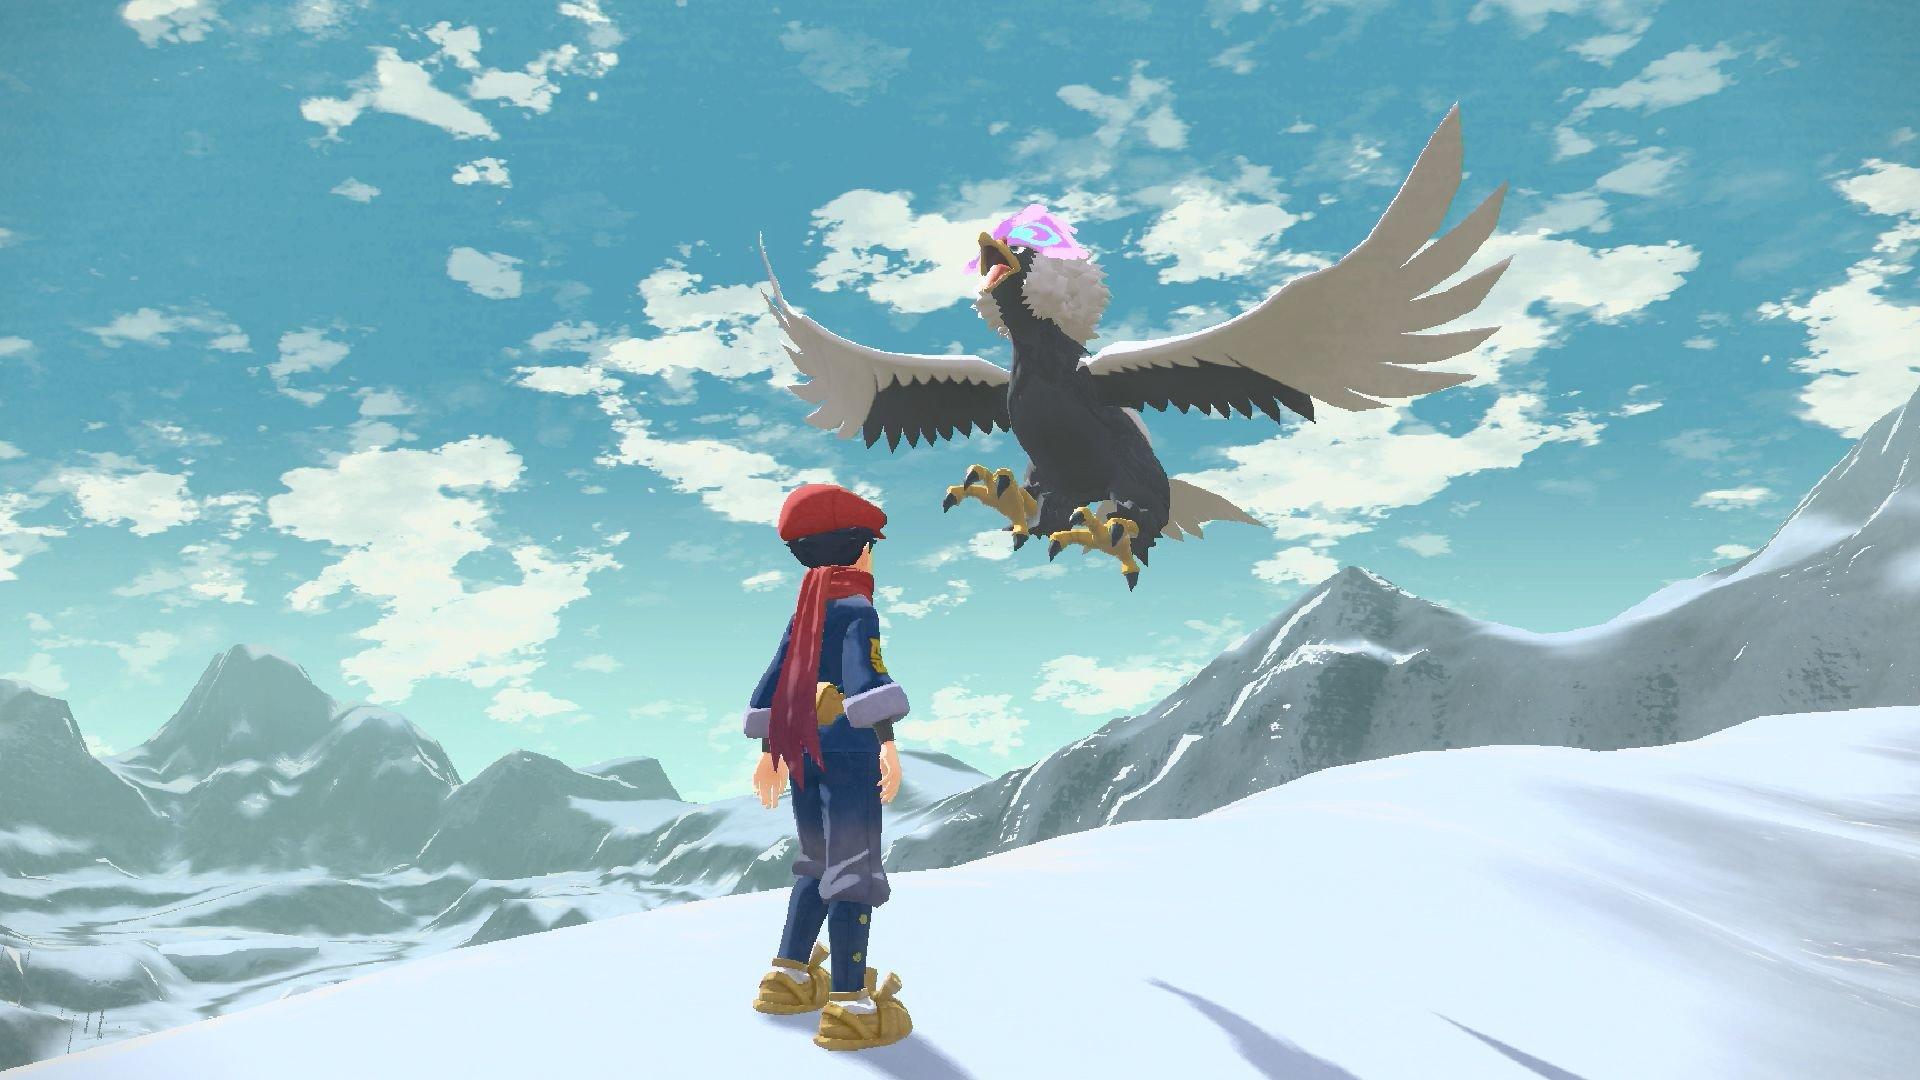 Pokémon Legends: Arceus' Full Pokédex: All Nintendo Switch Game's